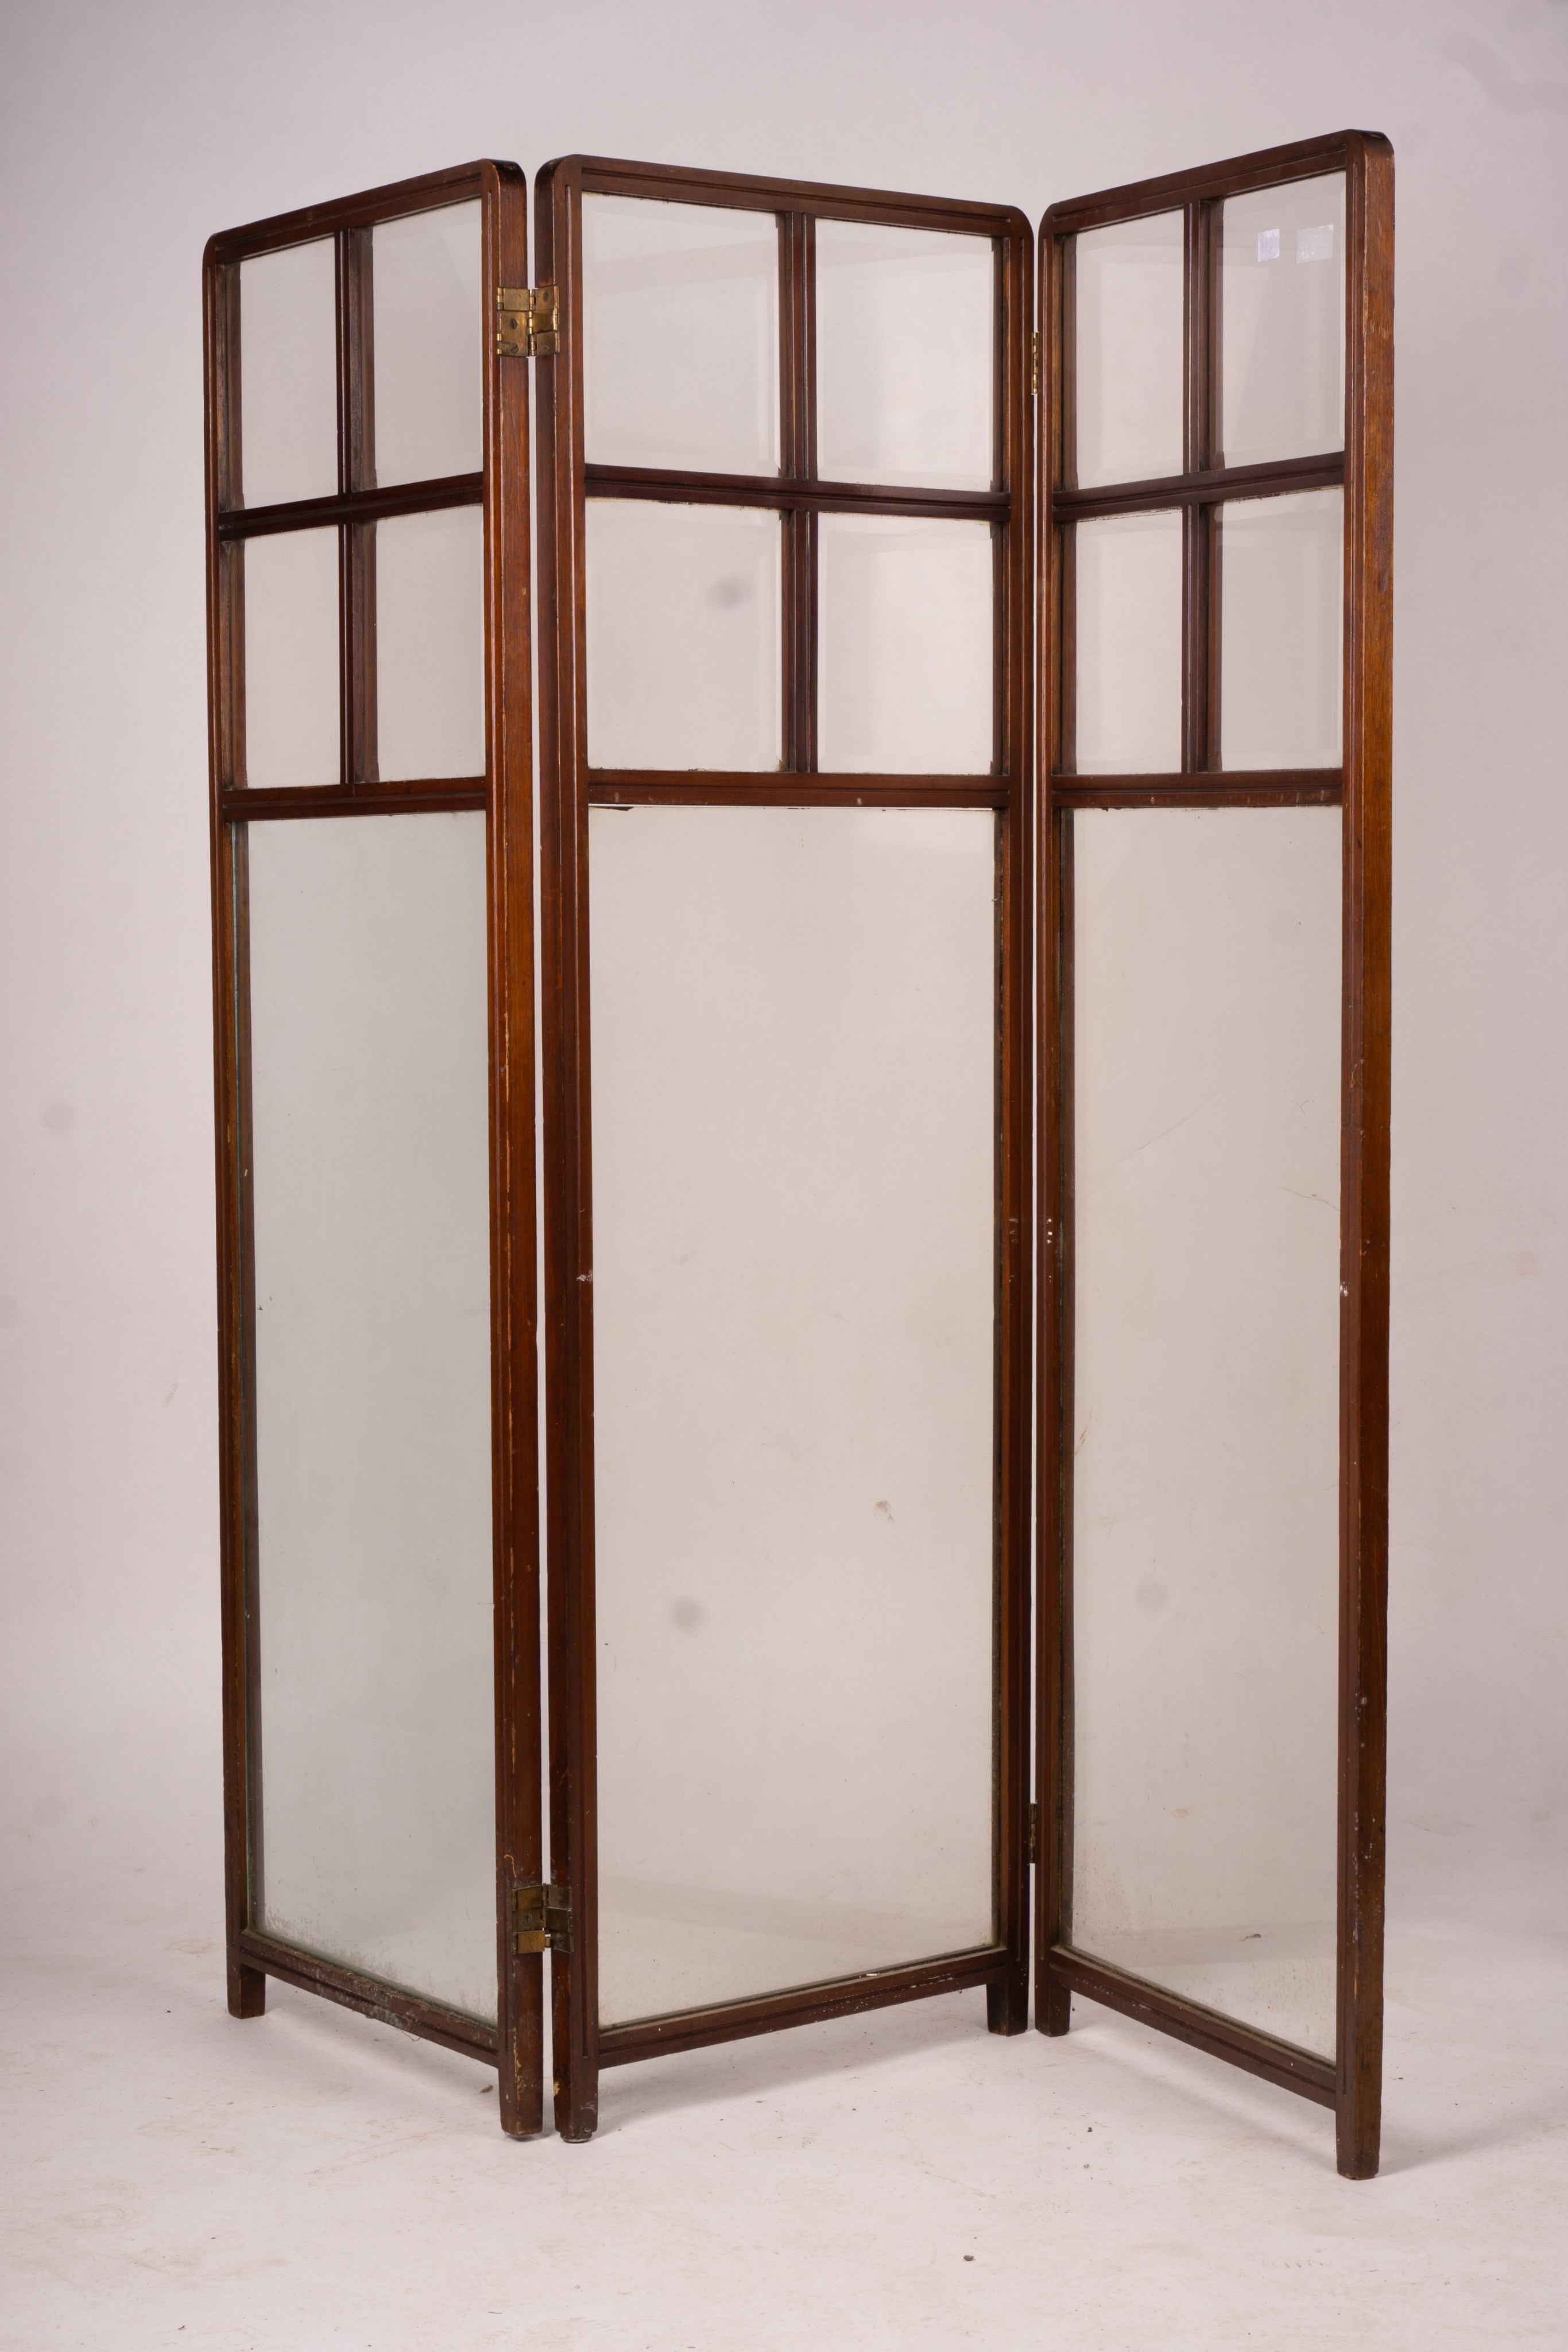 An Edwardian glazed mahogany three fold screen, each panel width 51cm, height 157cm